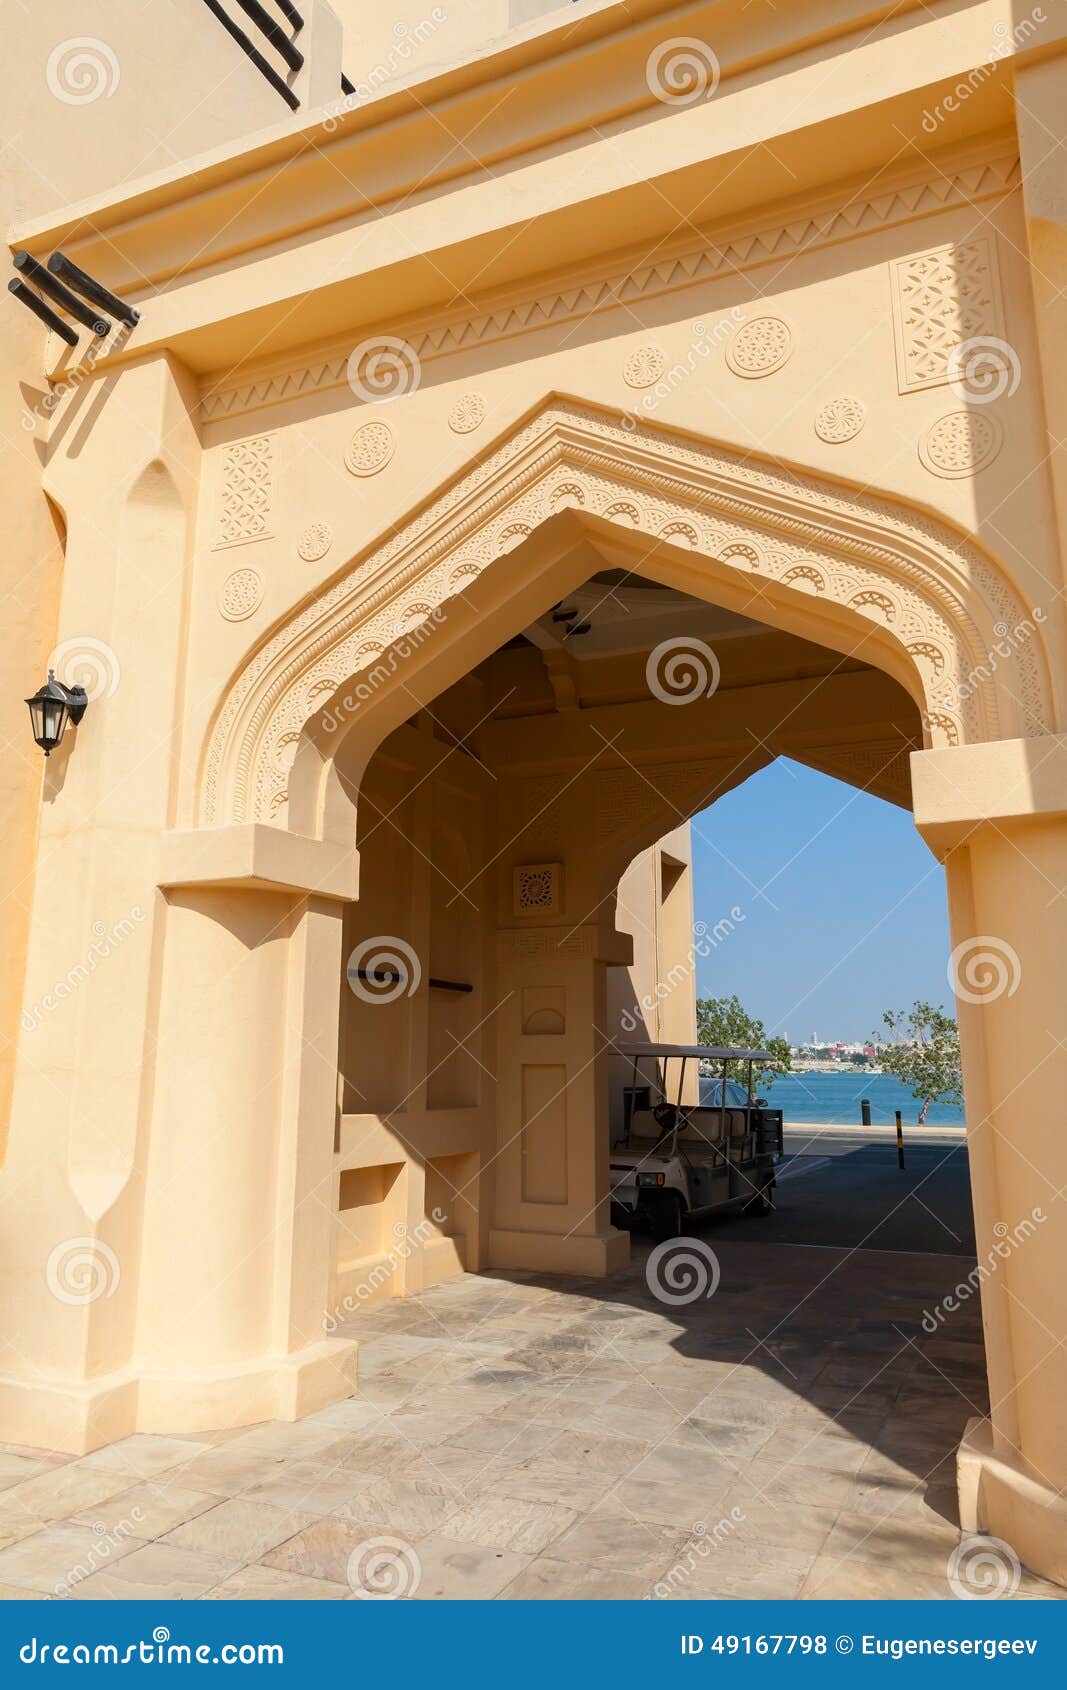 yellow-house-facade-classical-arabic-arch-style-49167798.jpg